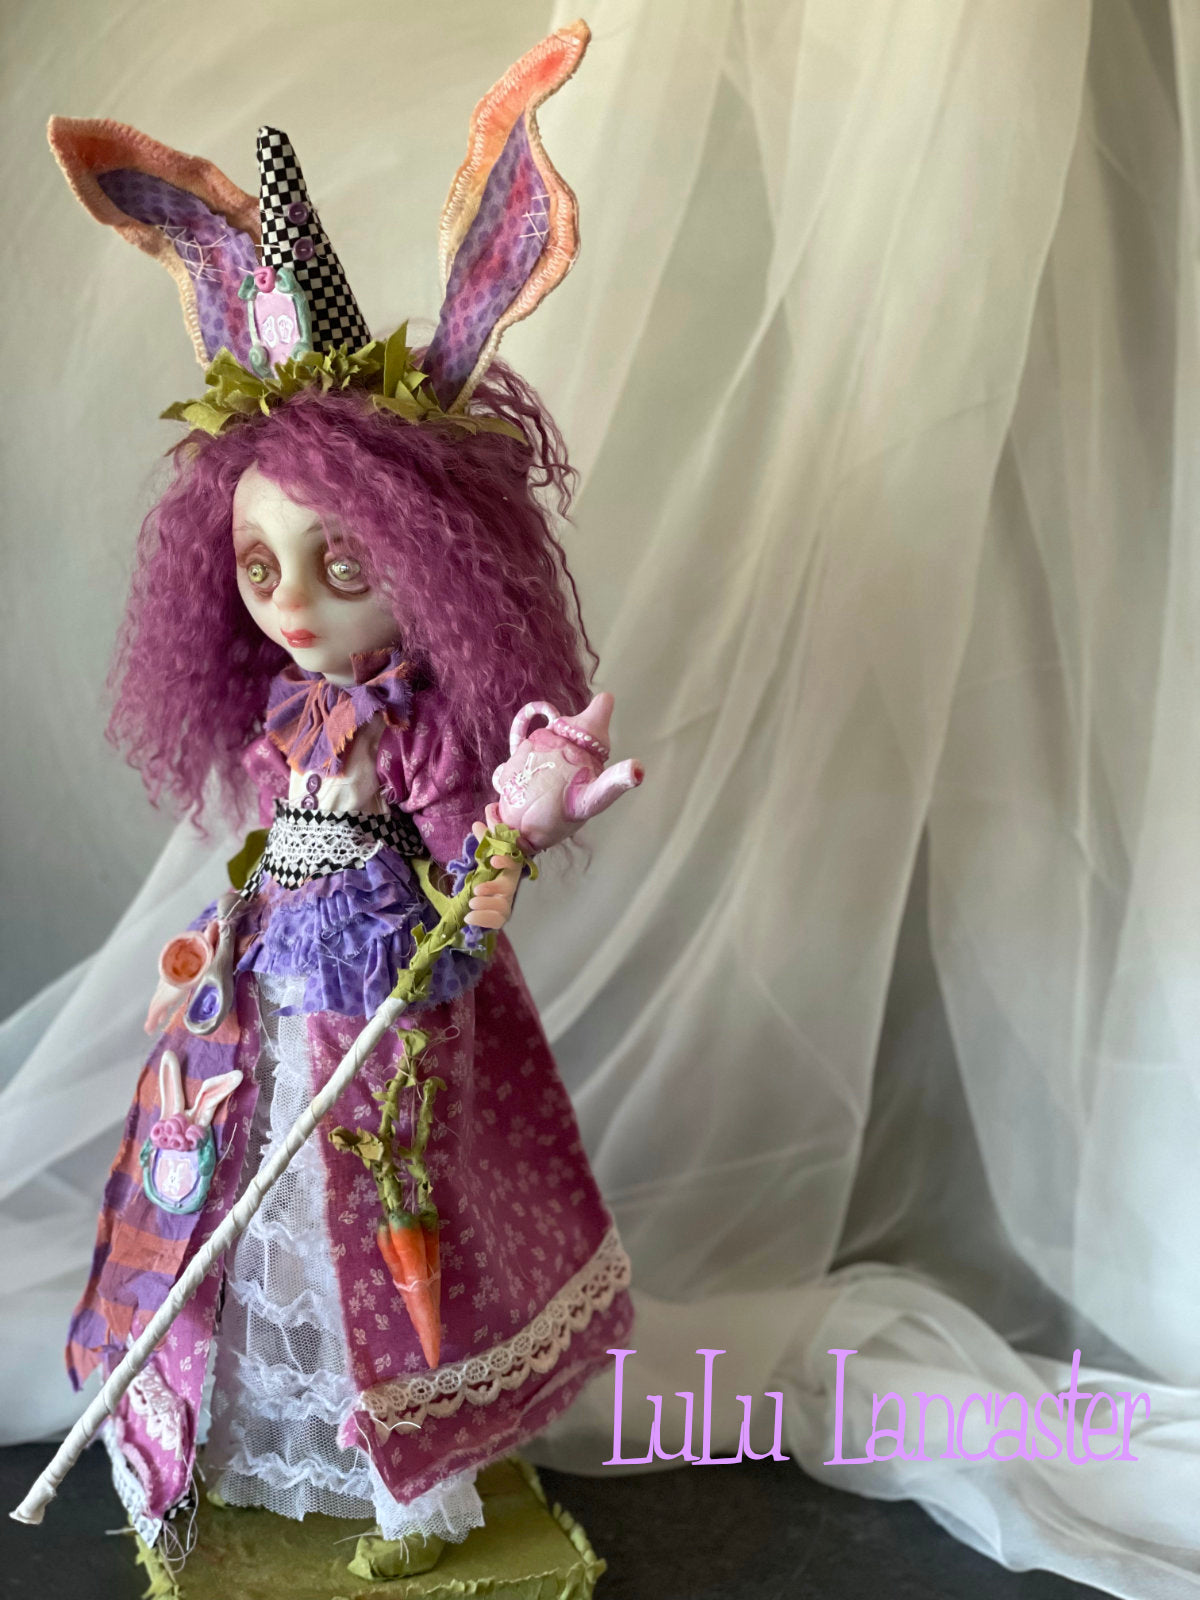 Heddwyn Hare Original LuLu Lancaster Art Doll